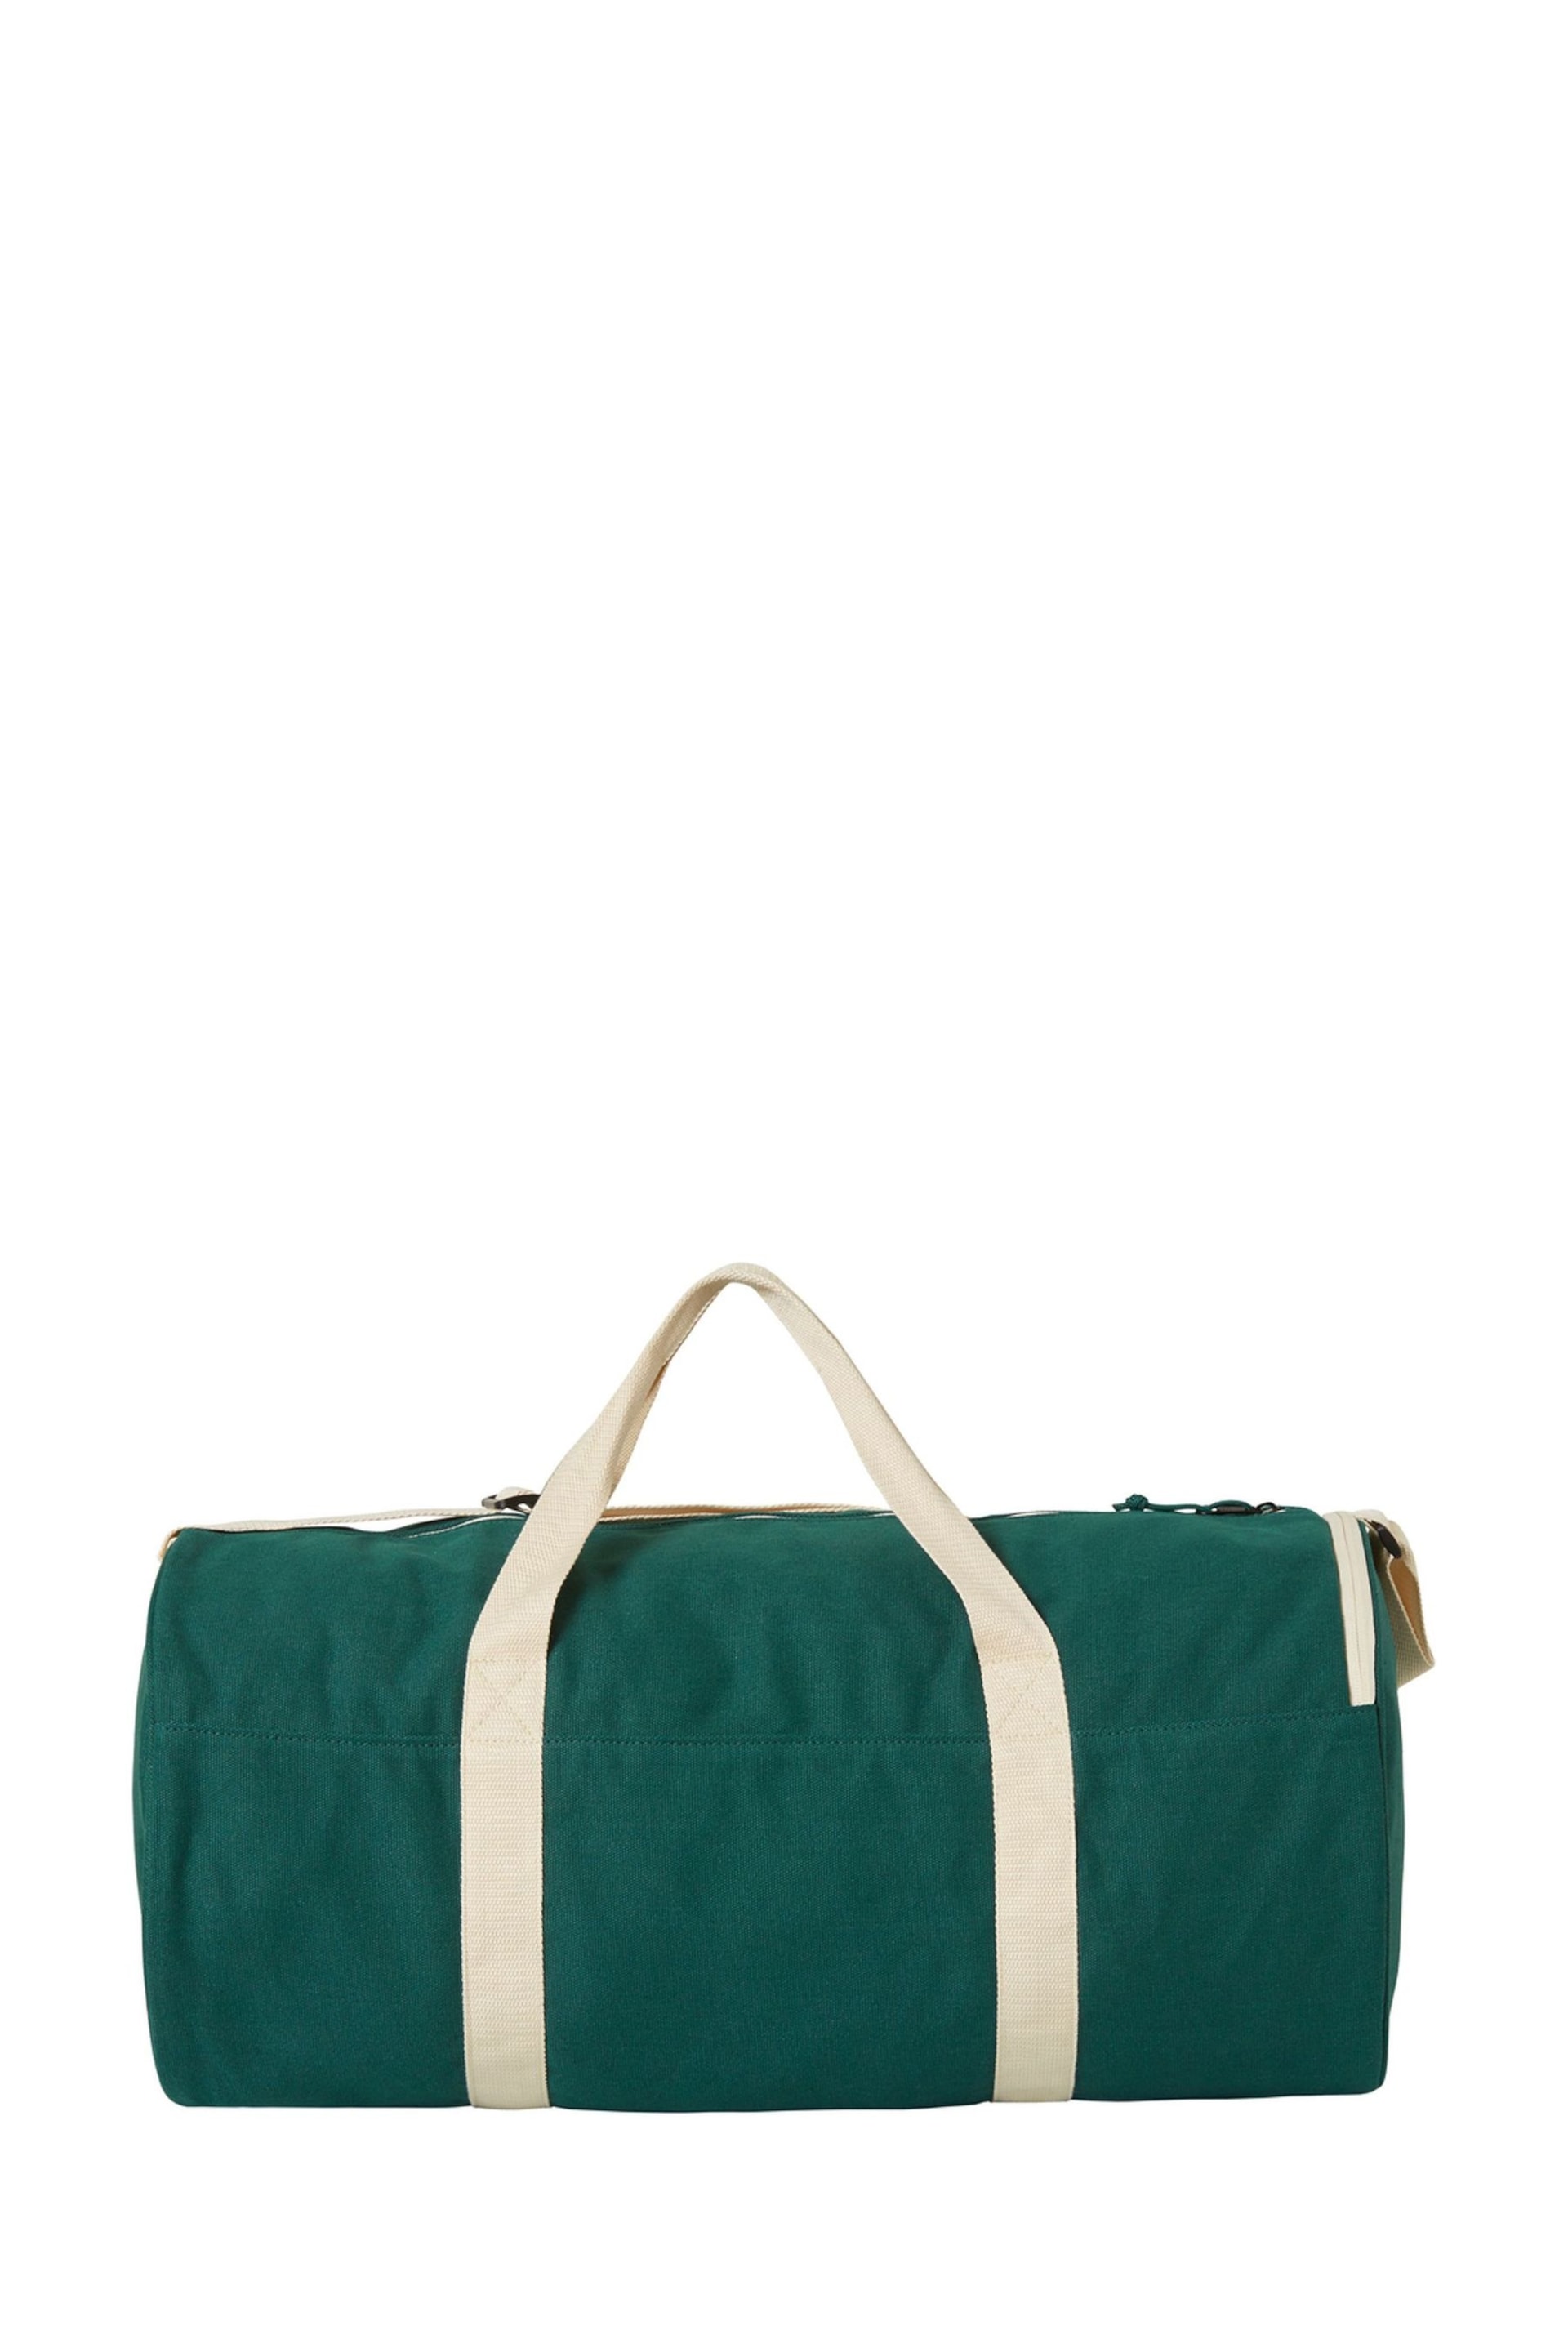 New Balance Green Canvas Duffel Bag - Image 2 of 3